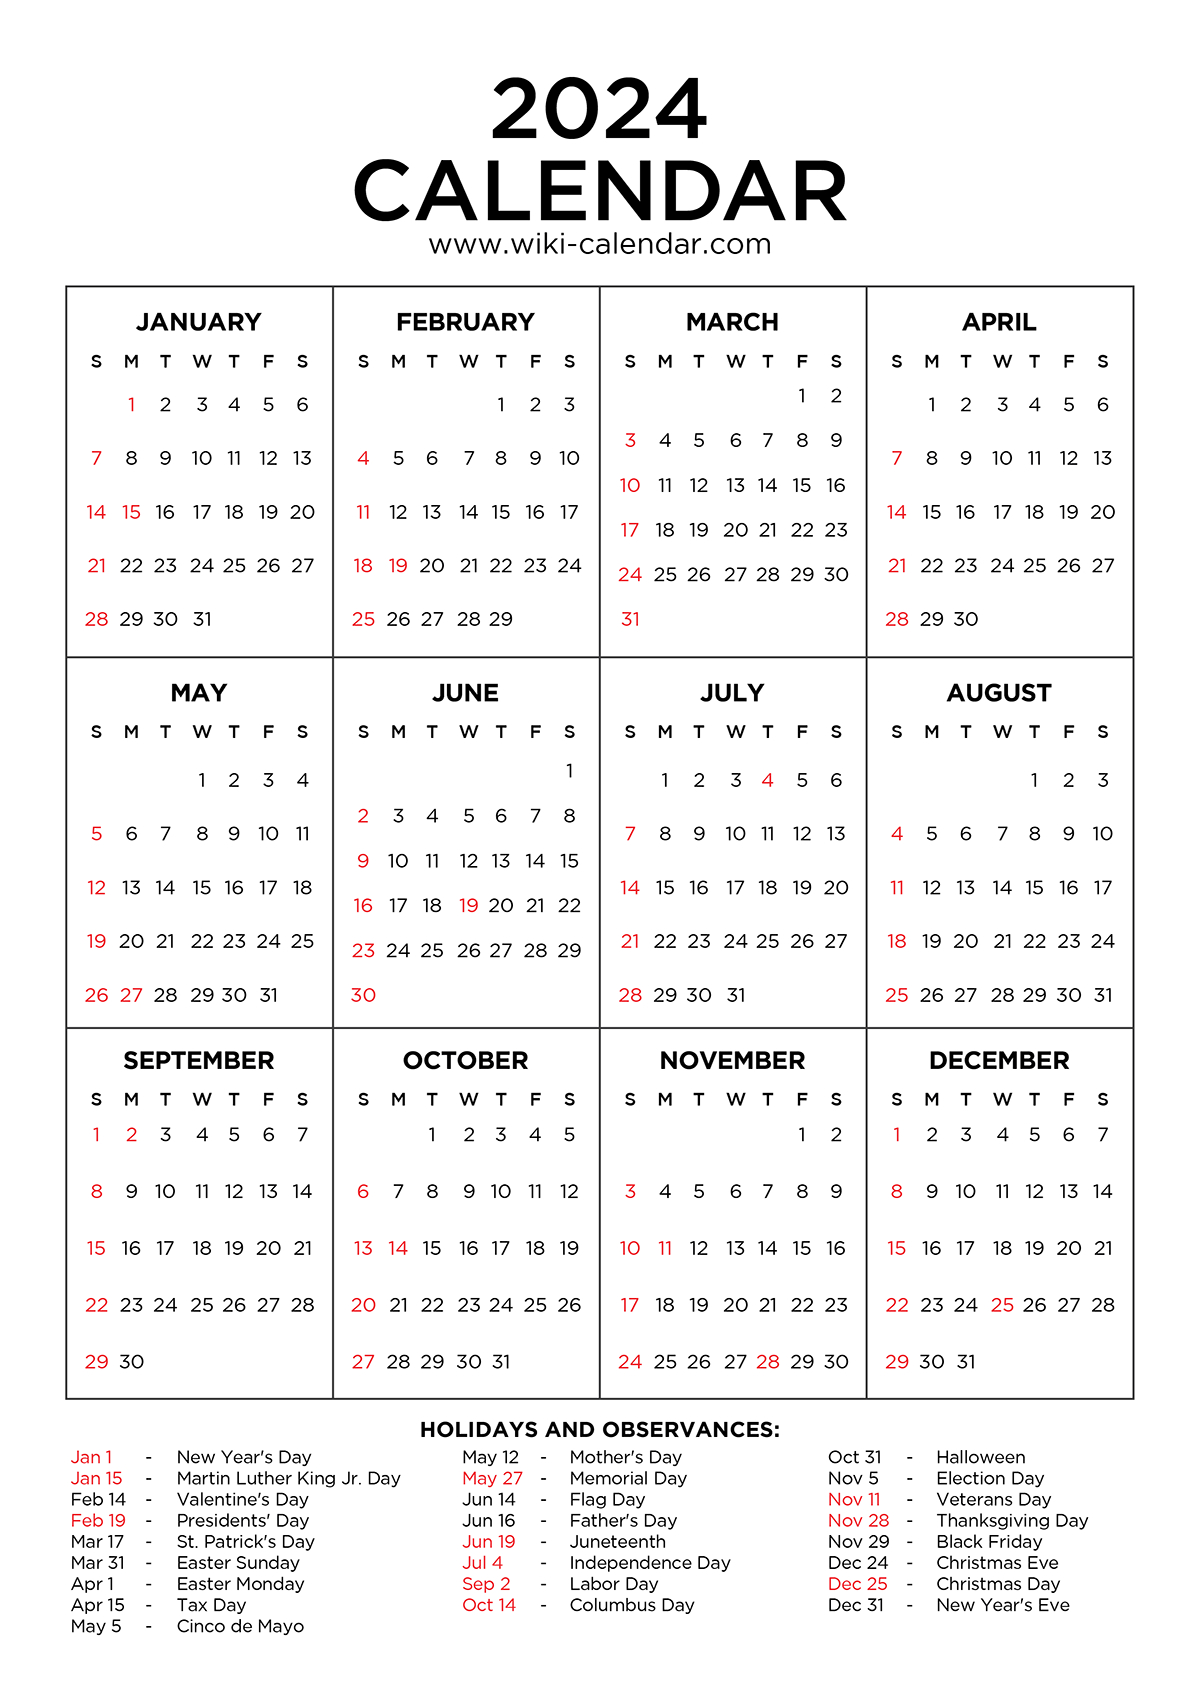 Year 2024 Calendar Printable With Holidays - Wiki Calendar | Printable Calendar 2024 With Holidays